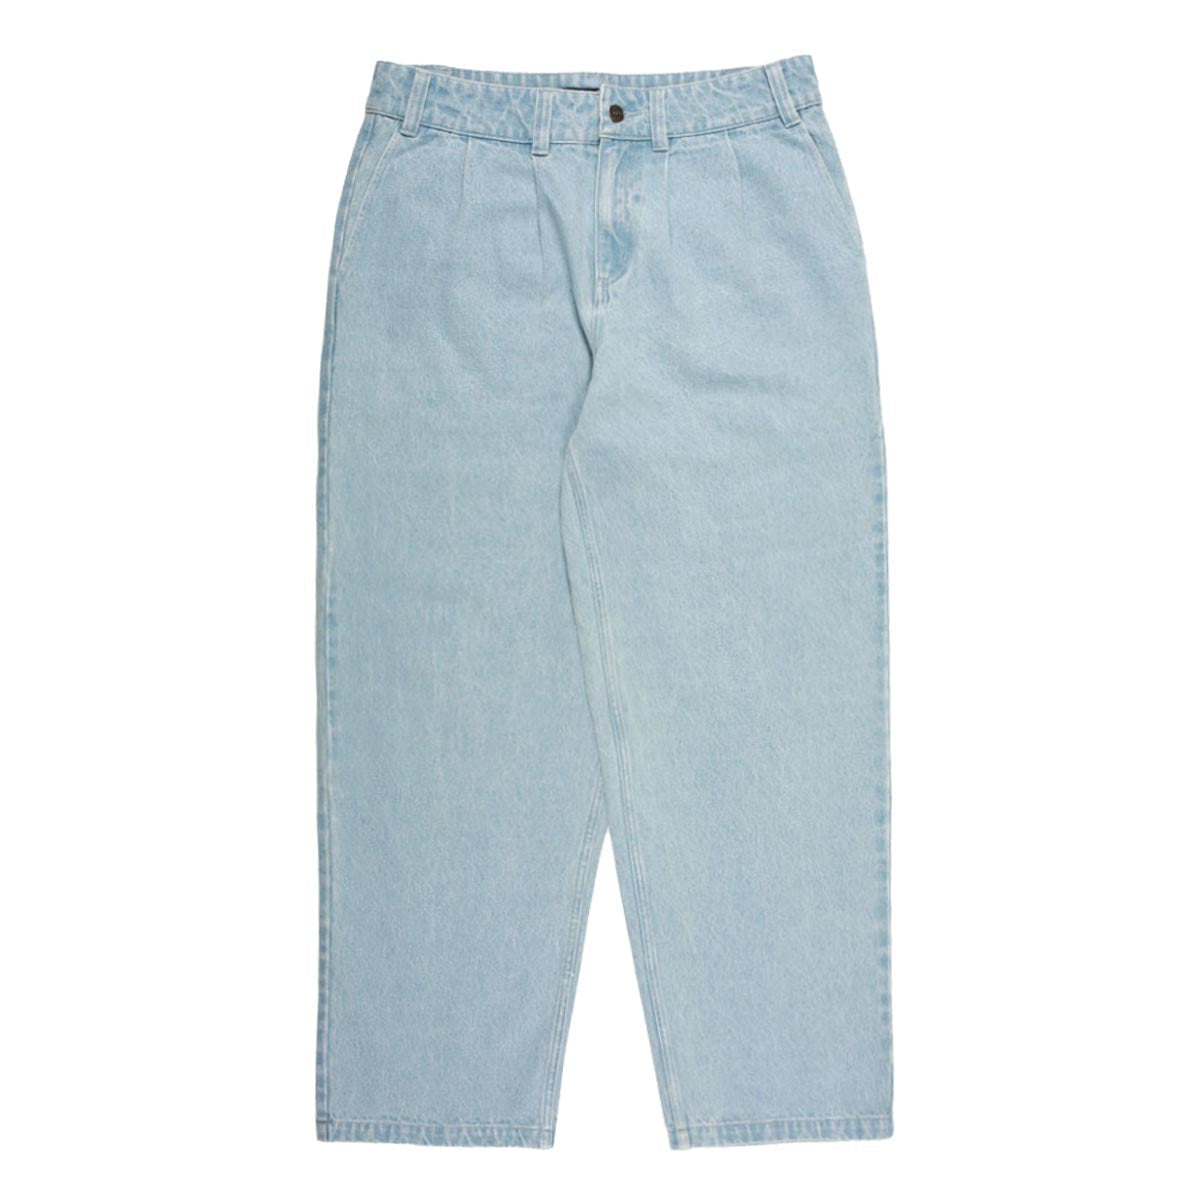 Theories Belvedere Denim Trouser Jeans - Lightwash Blue image 1